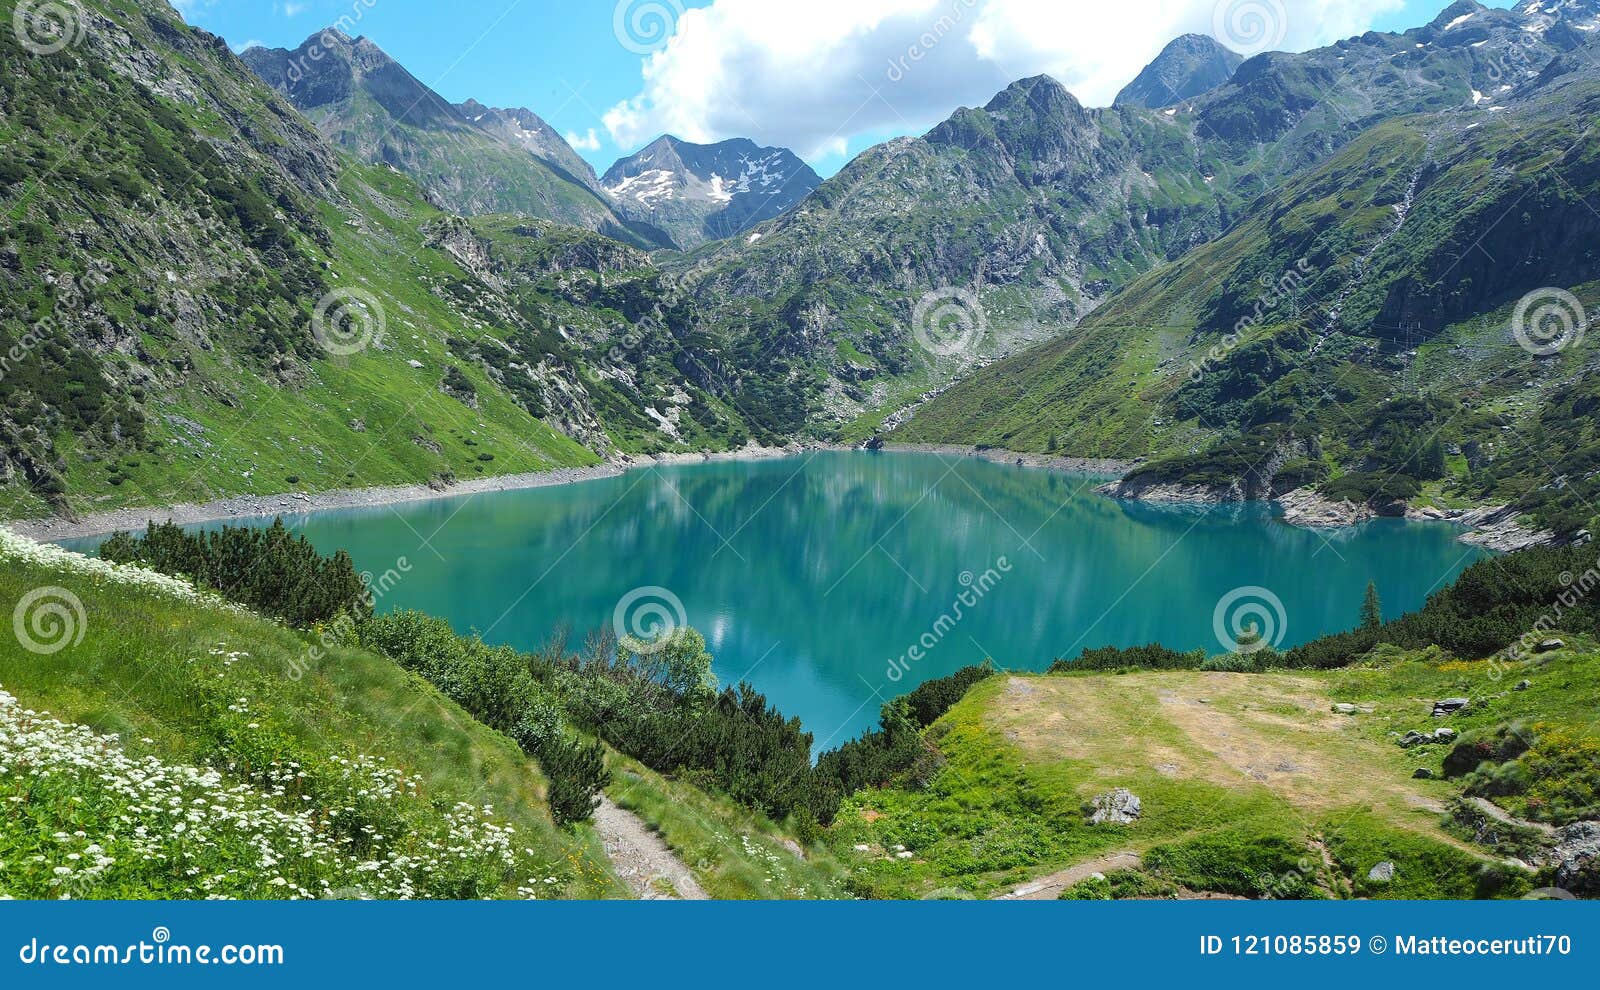 landscape of the lake barbellino an alpine artificial lake. italian alps. italy